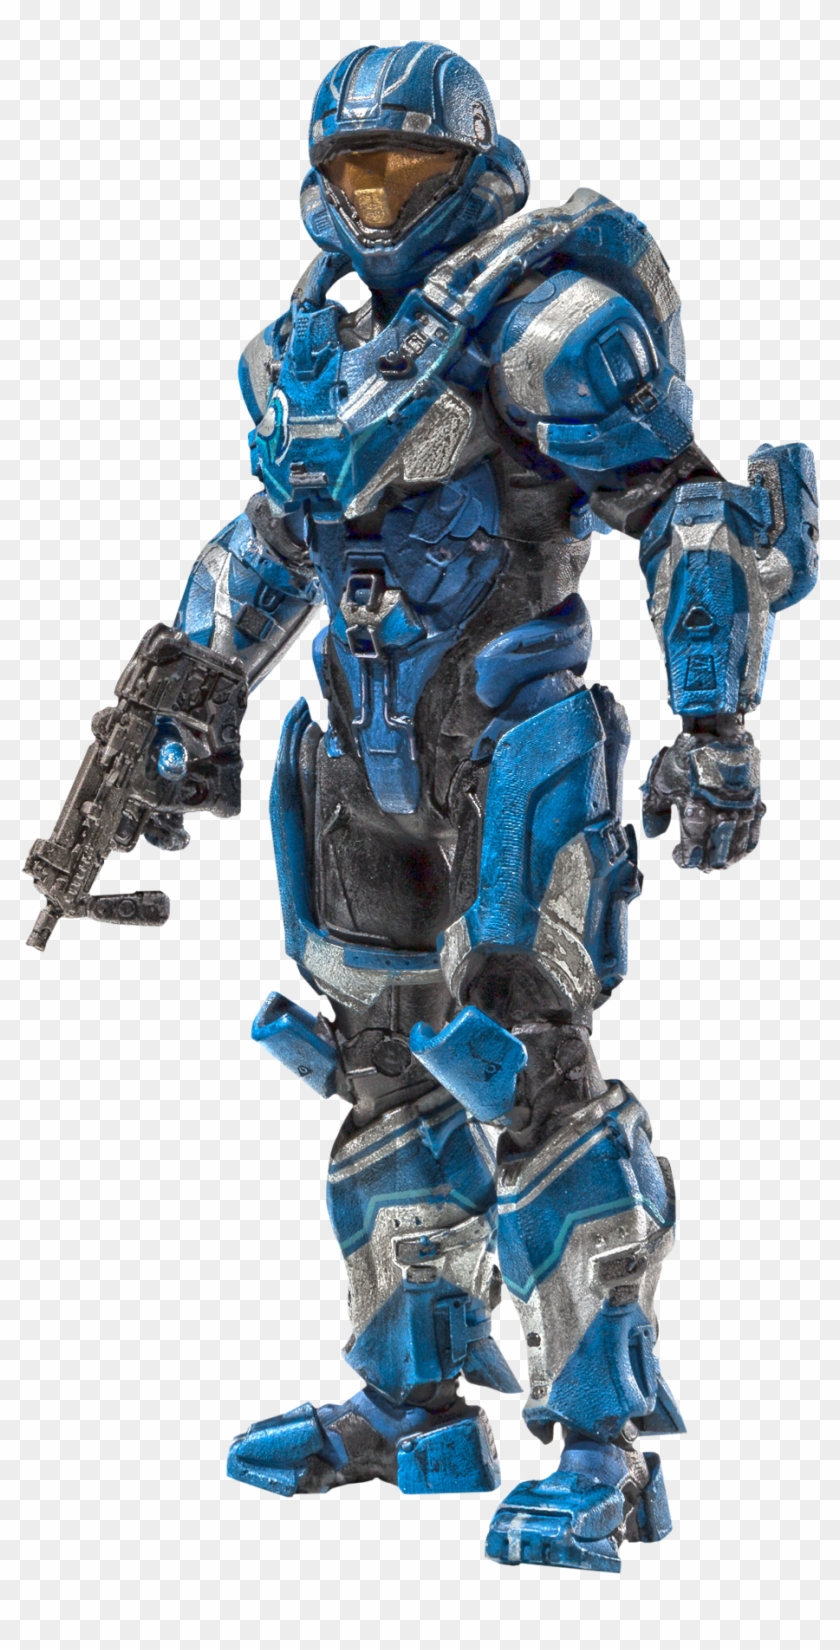 Spartan Helljumper 6” Action Figure - Halo 5 Blue Spartan Clipart #1404607